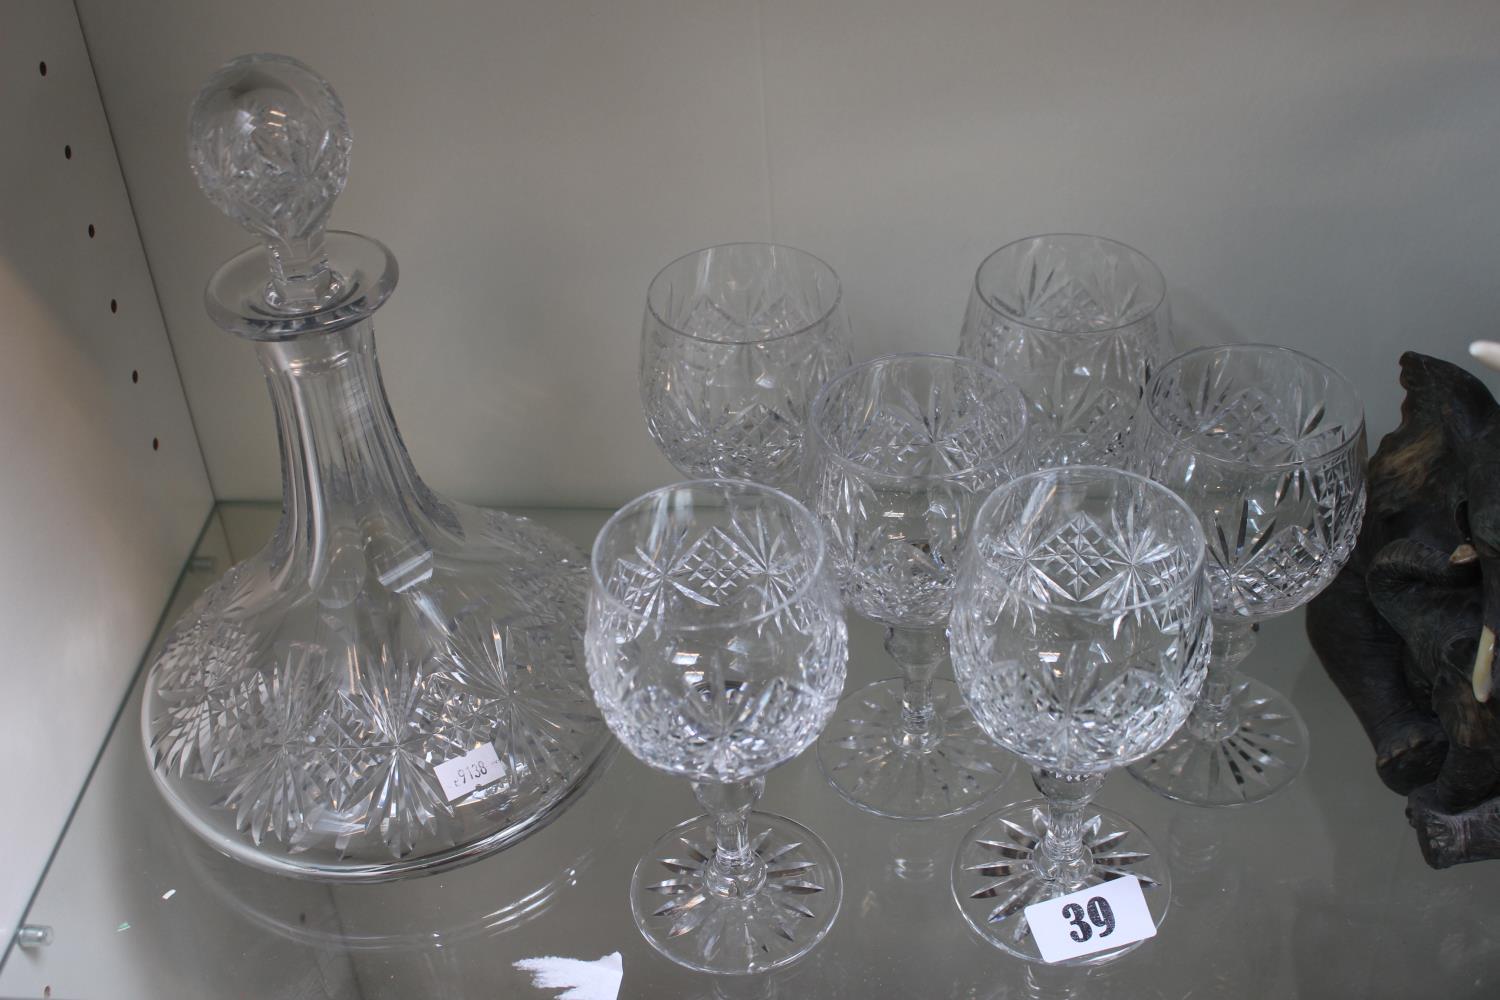 Set of 6 Thomas Webb Glasses and a Thomas Webb Decanter